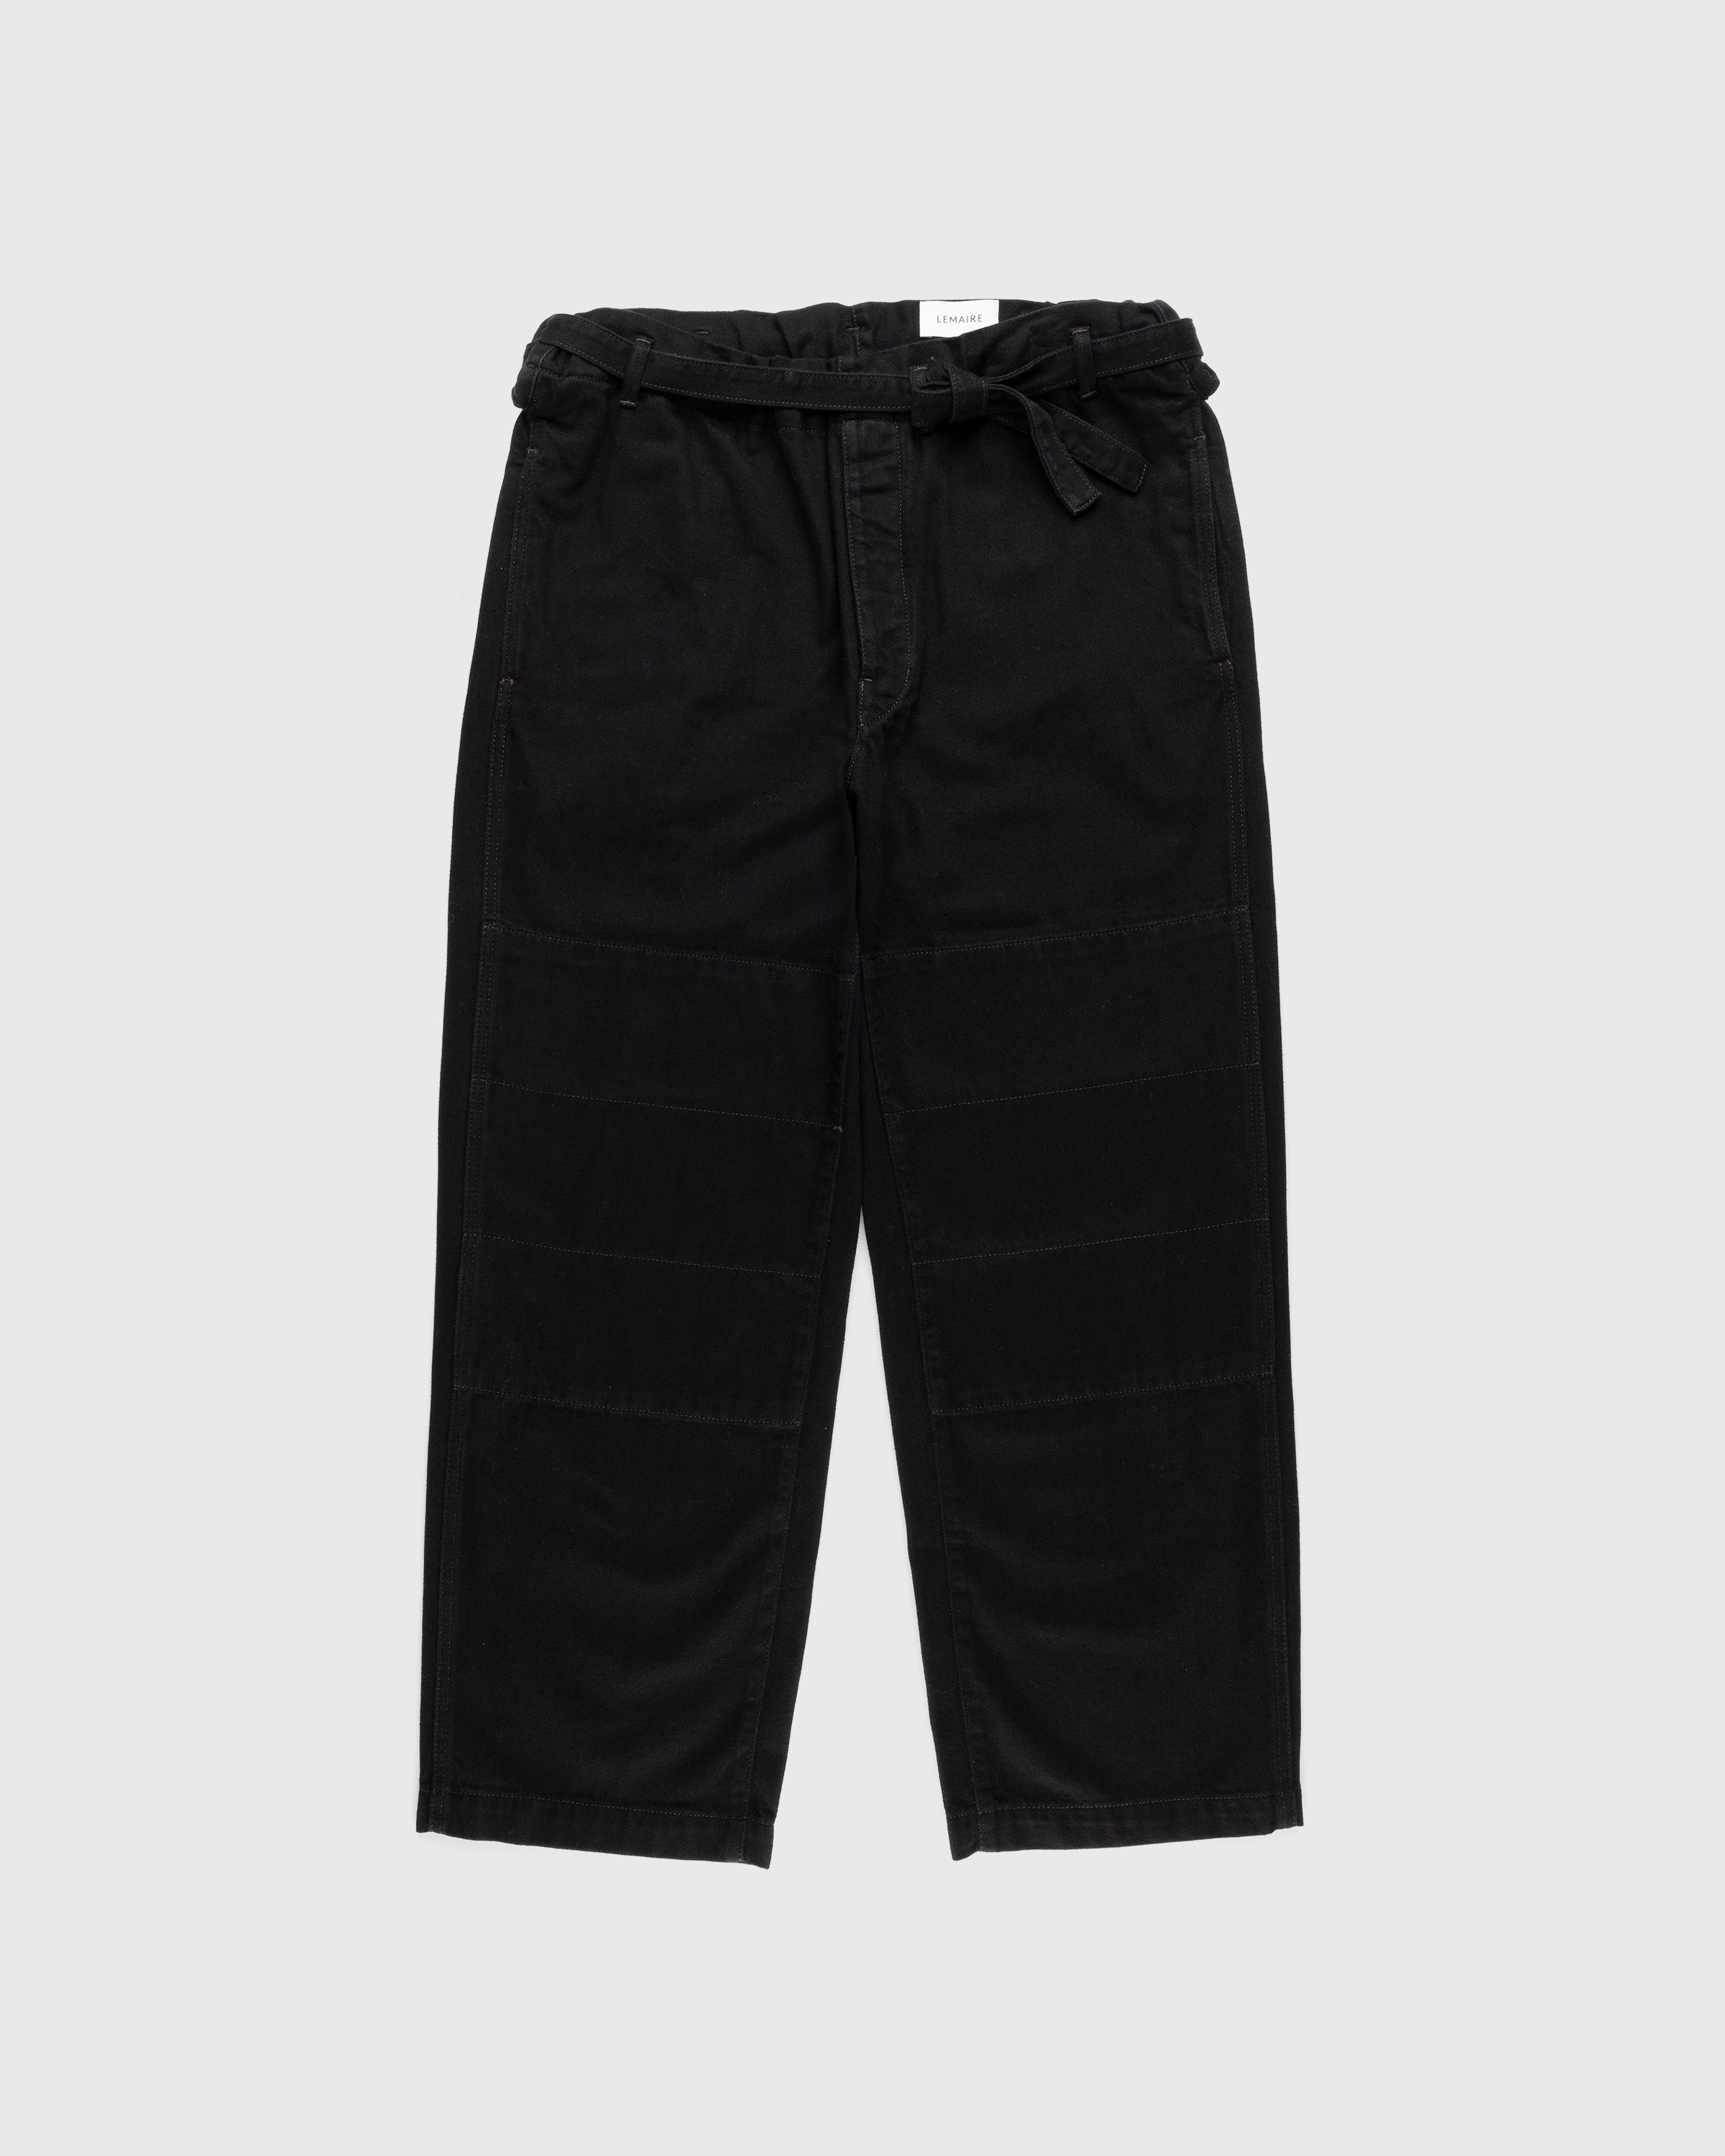 Lemaire - Judo Pants - Clothing - Black - Image 1